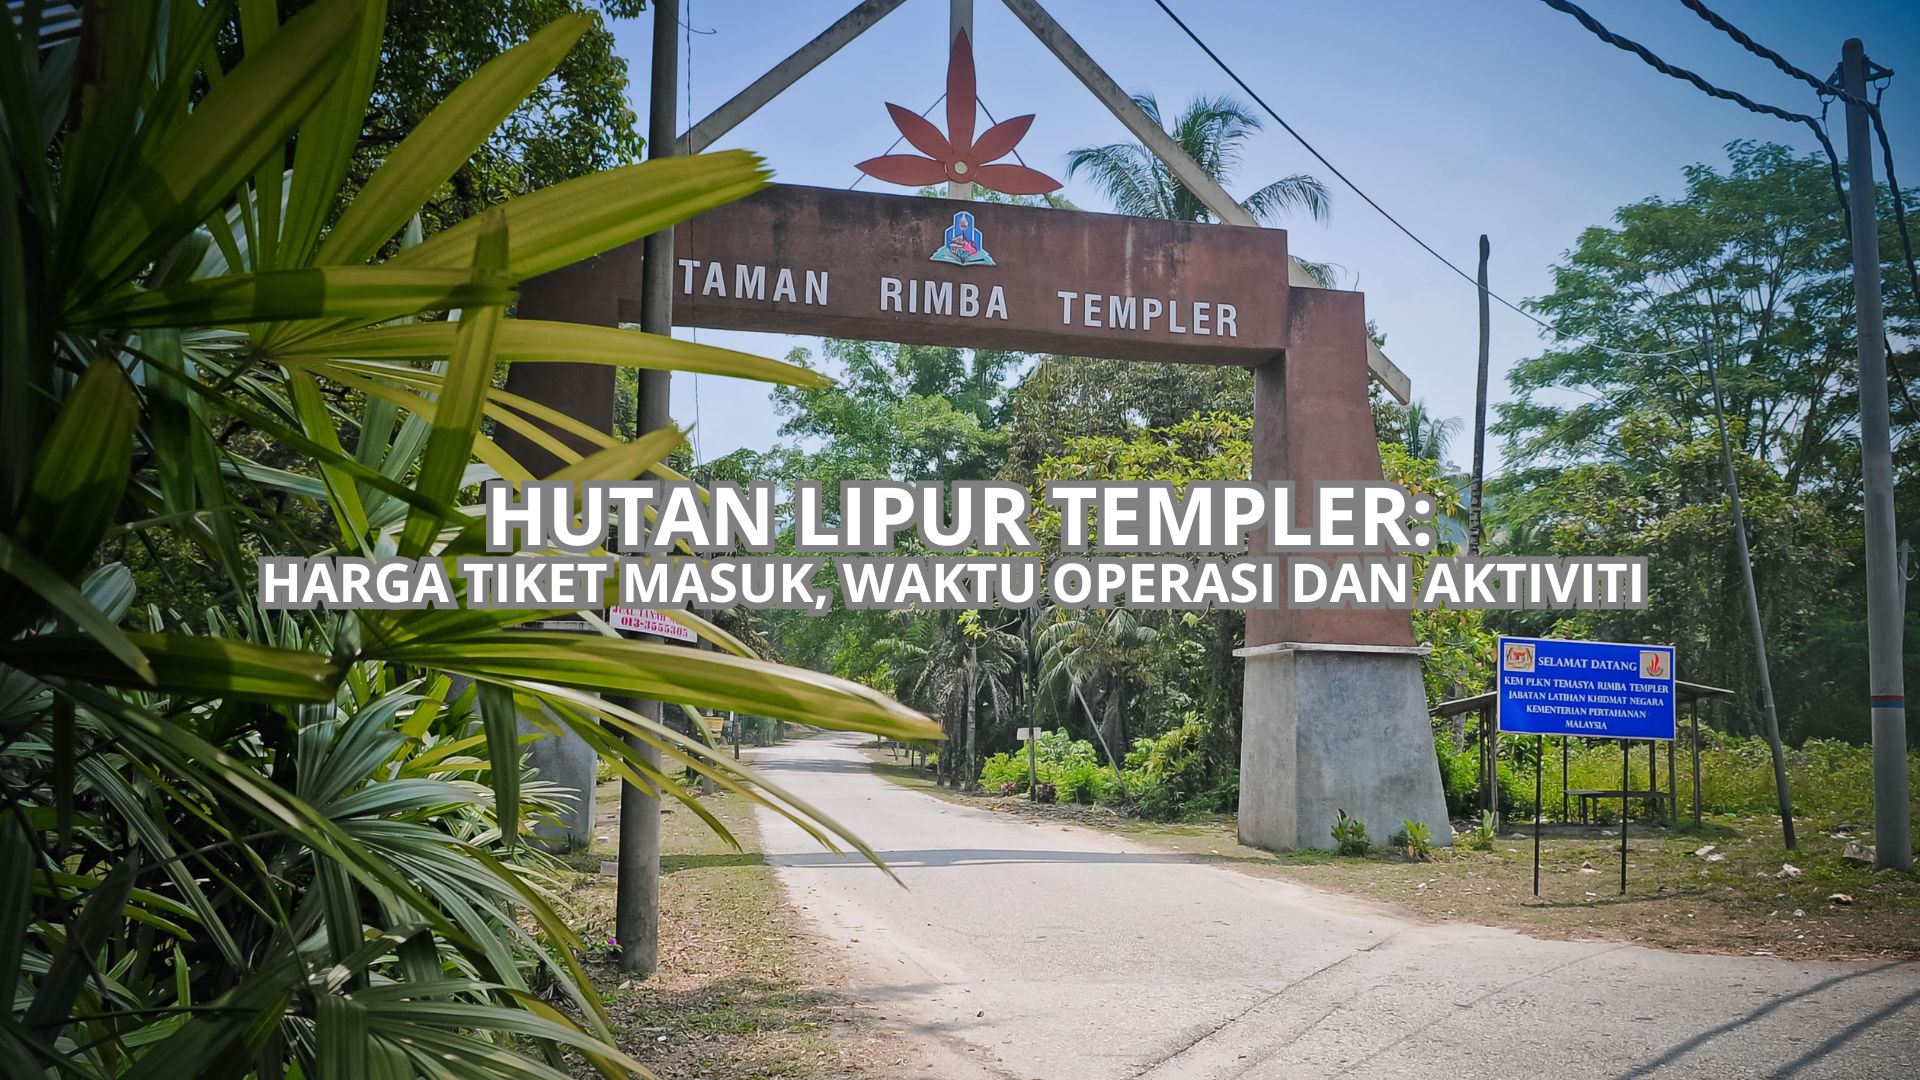 Hutan Lipur Templer Cover